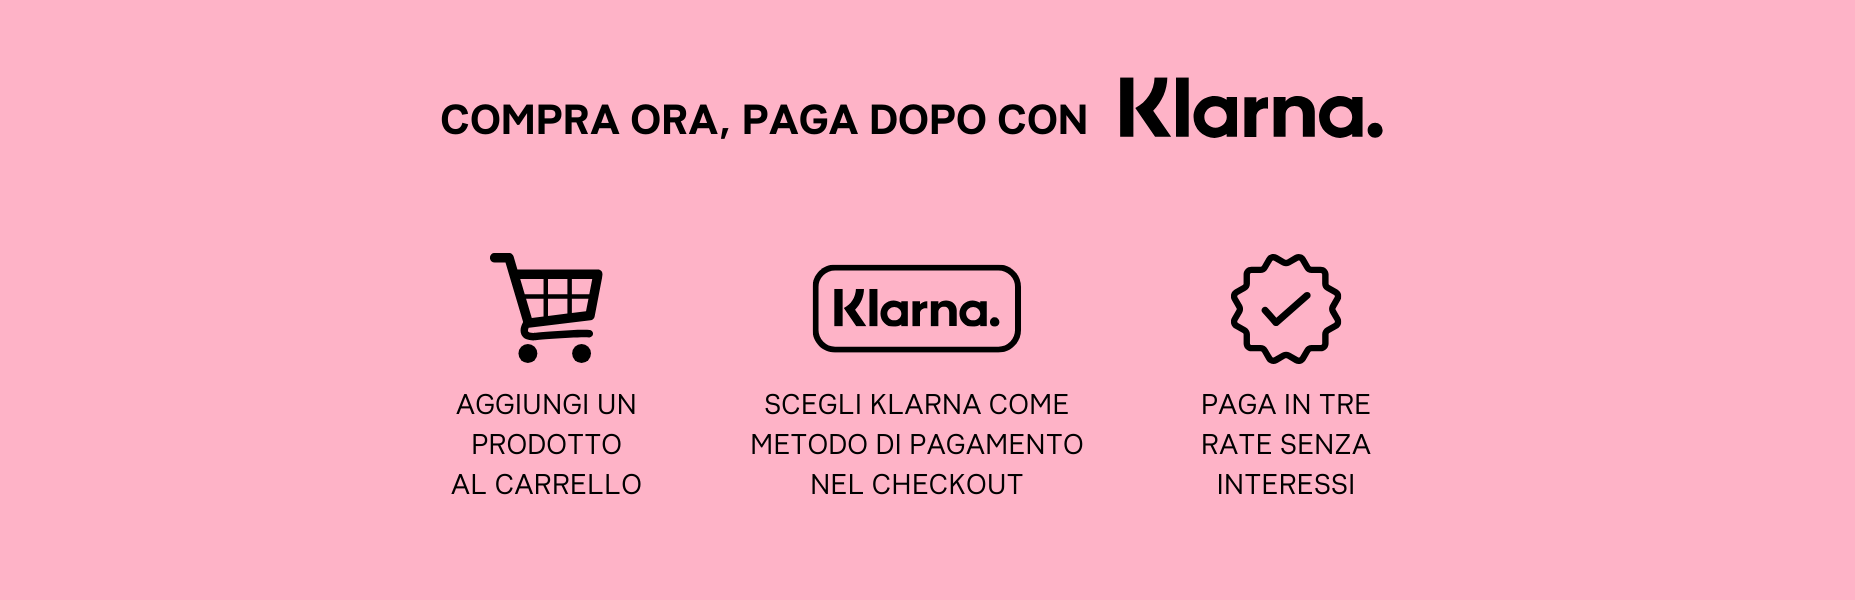 Compra_ora_paga_dopo_con_Klarna